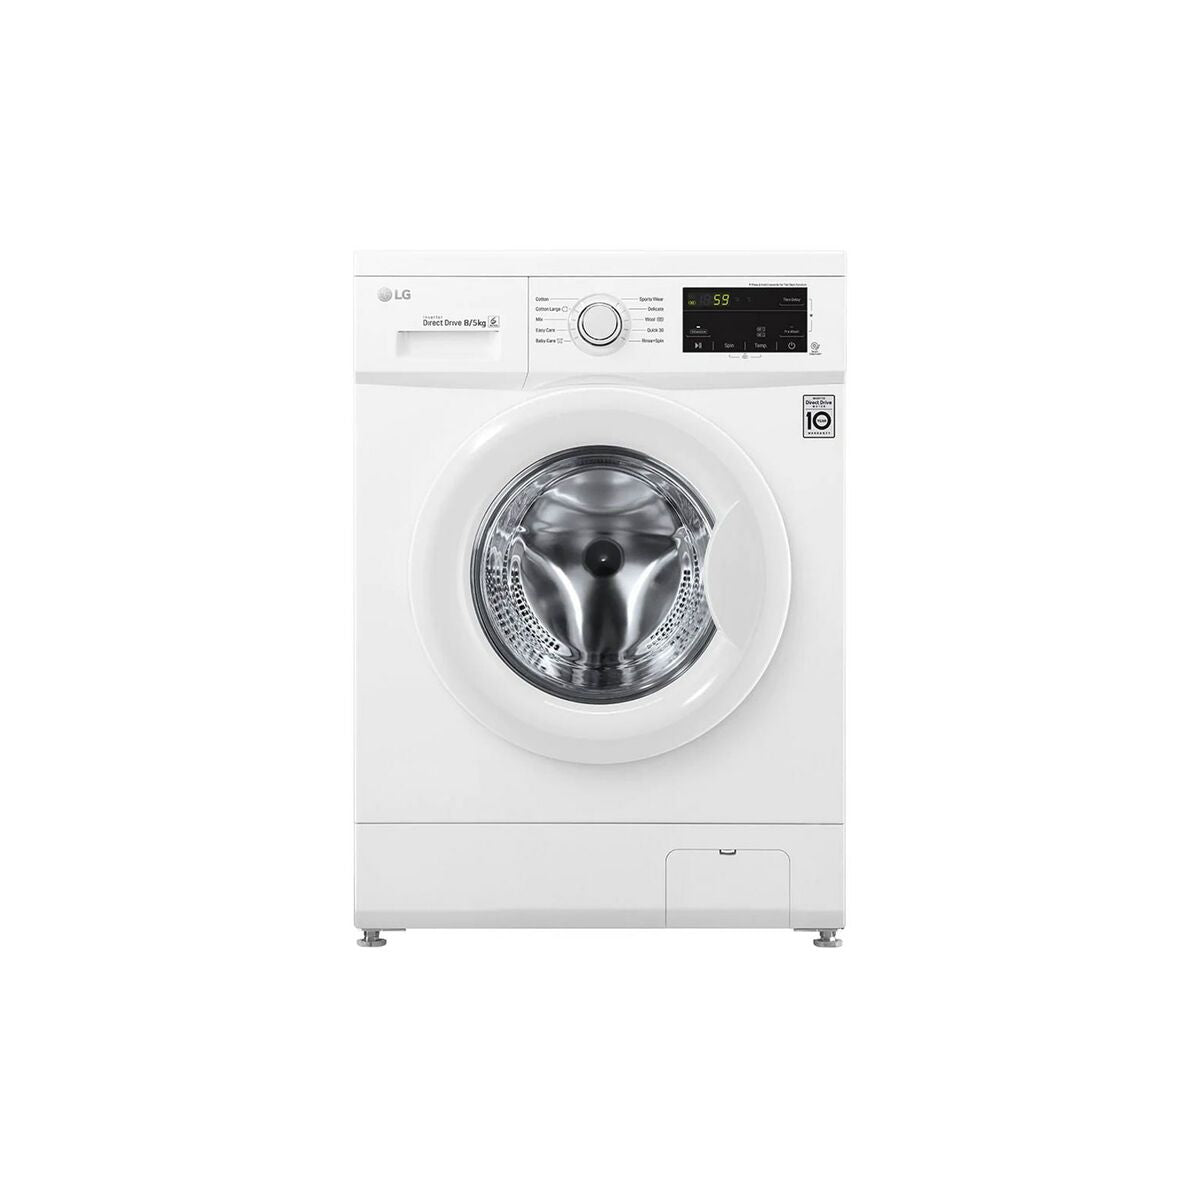 Washer - Dryer LG F4J3TM5WD 8kg / 5kg 1400 rpm